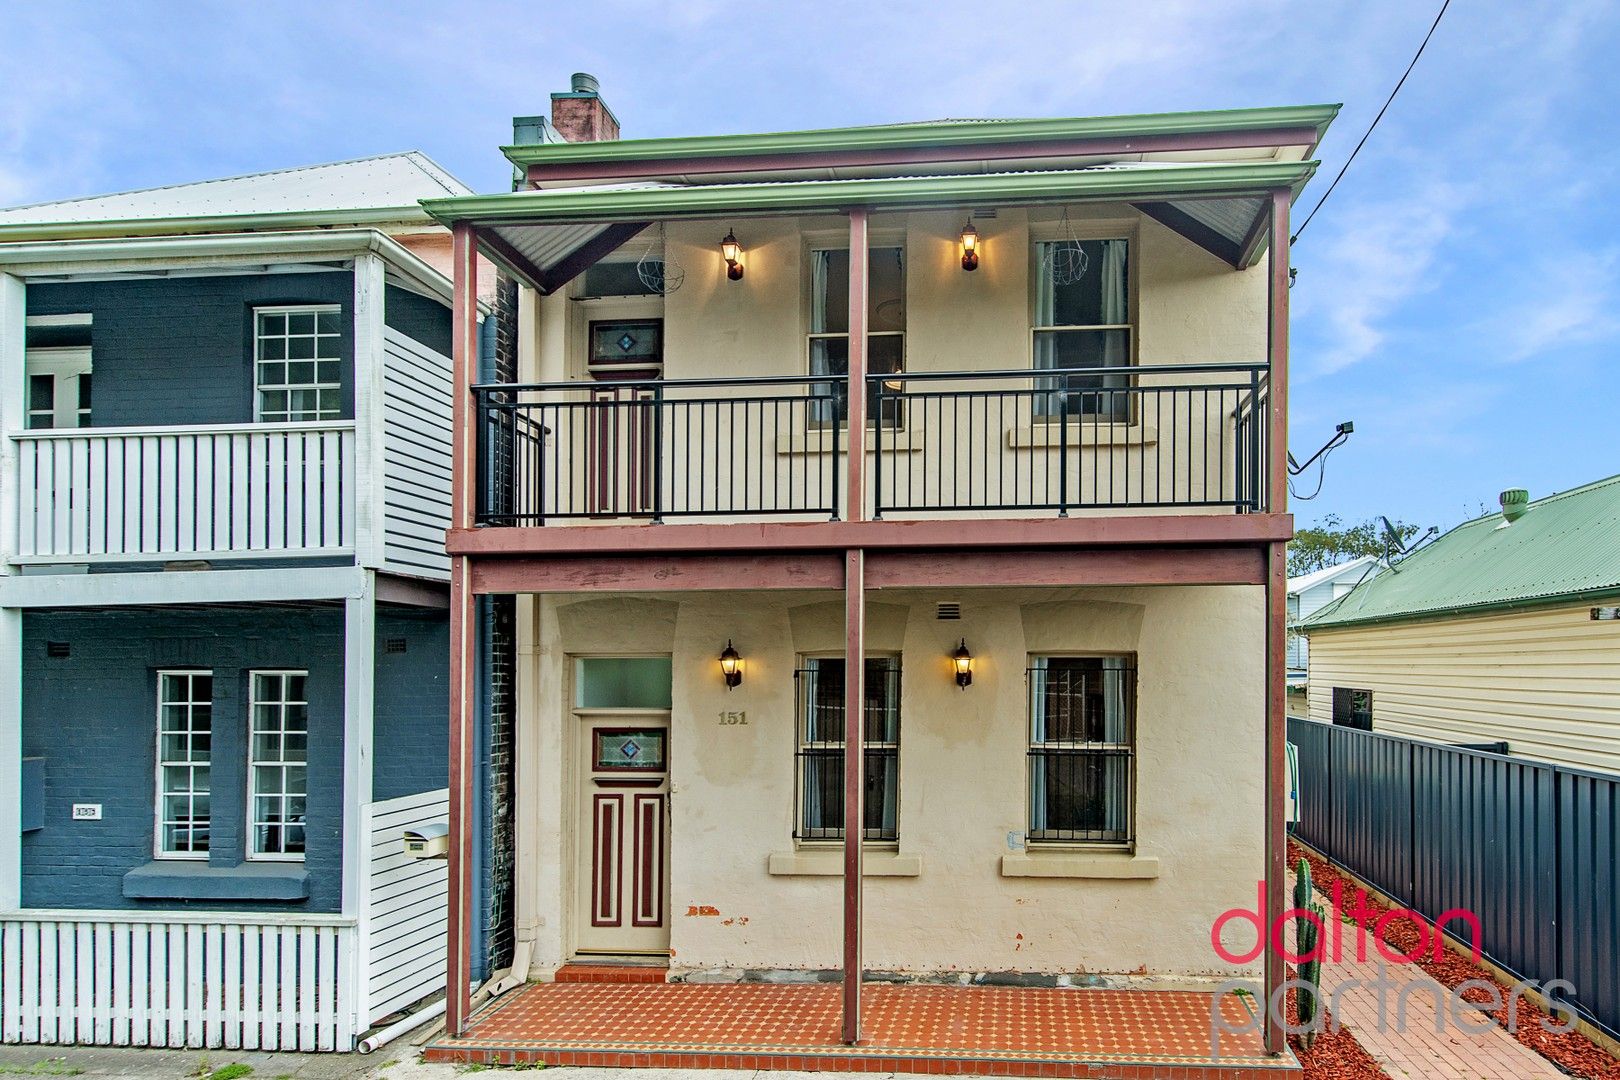 2 bedrooms House in 151 Wilson Street CARRINGTON NSW, 2294